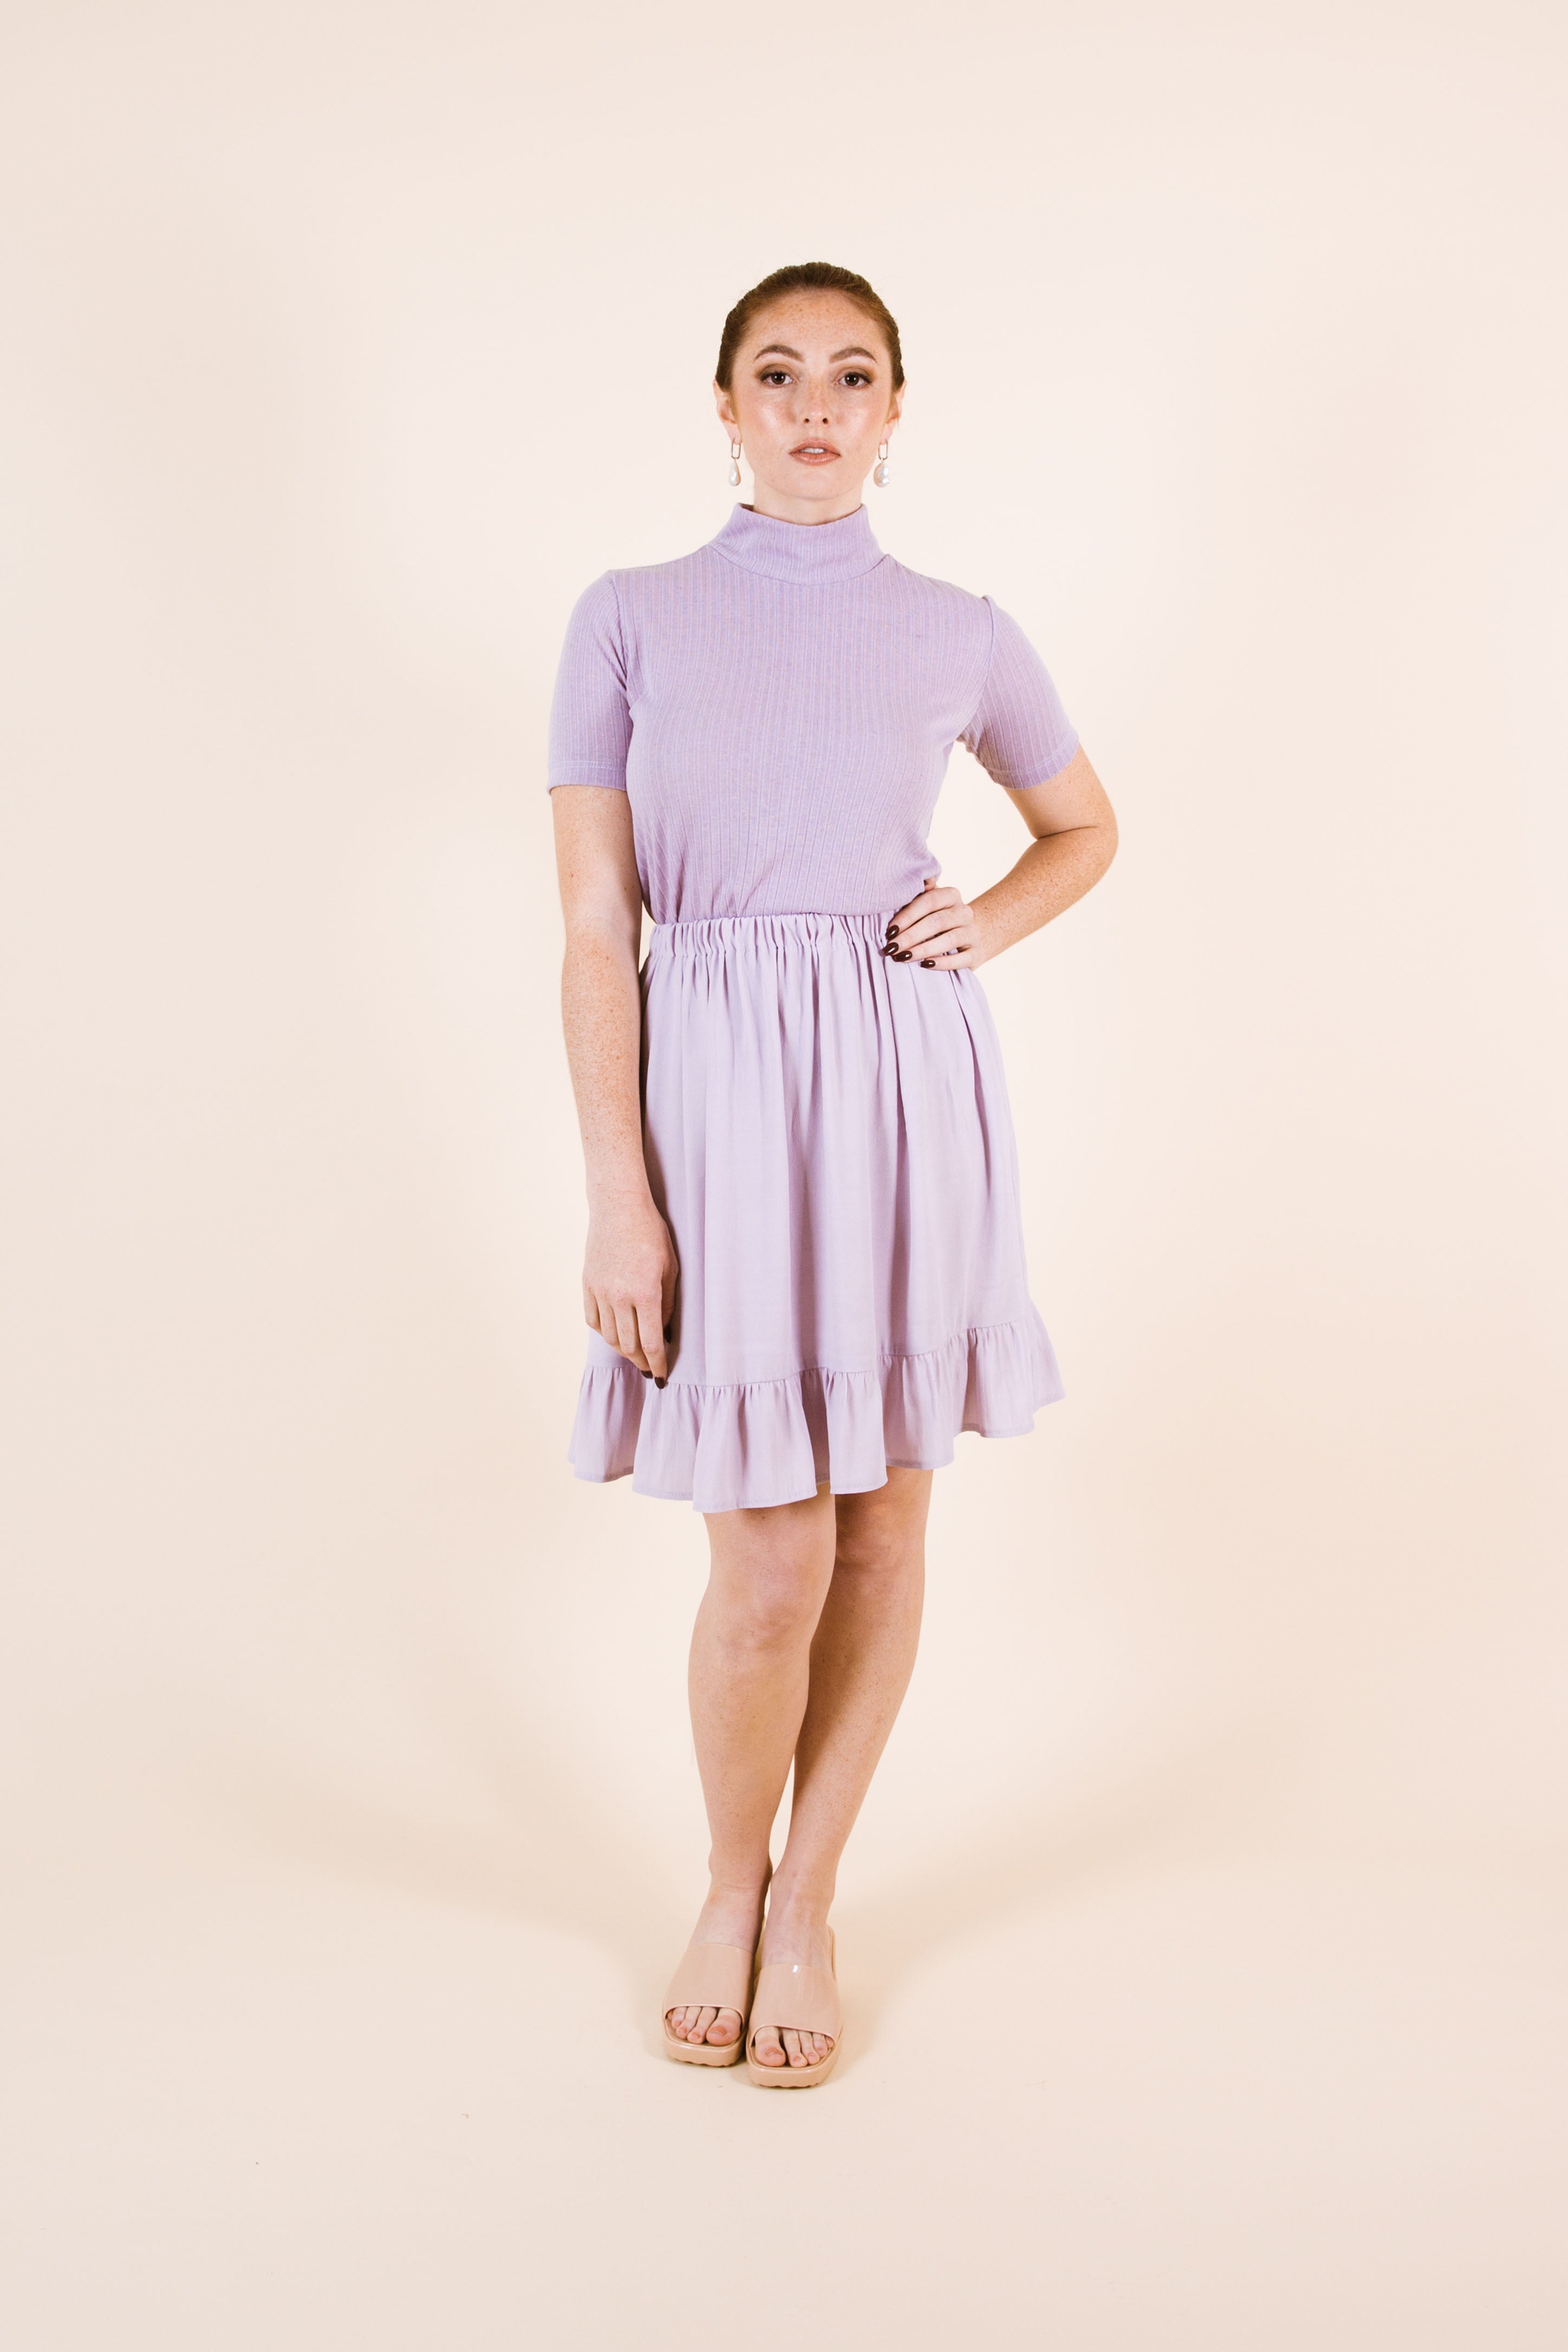 Estella Dress / Top / Skirt Sewing Pattern